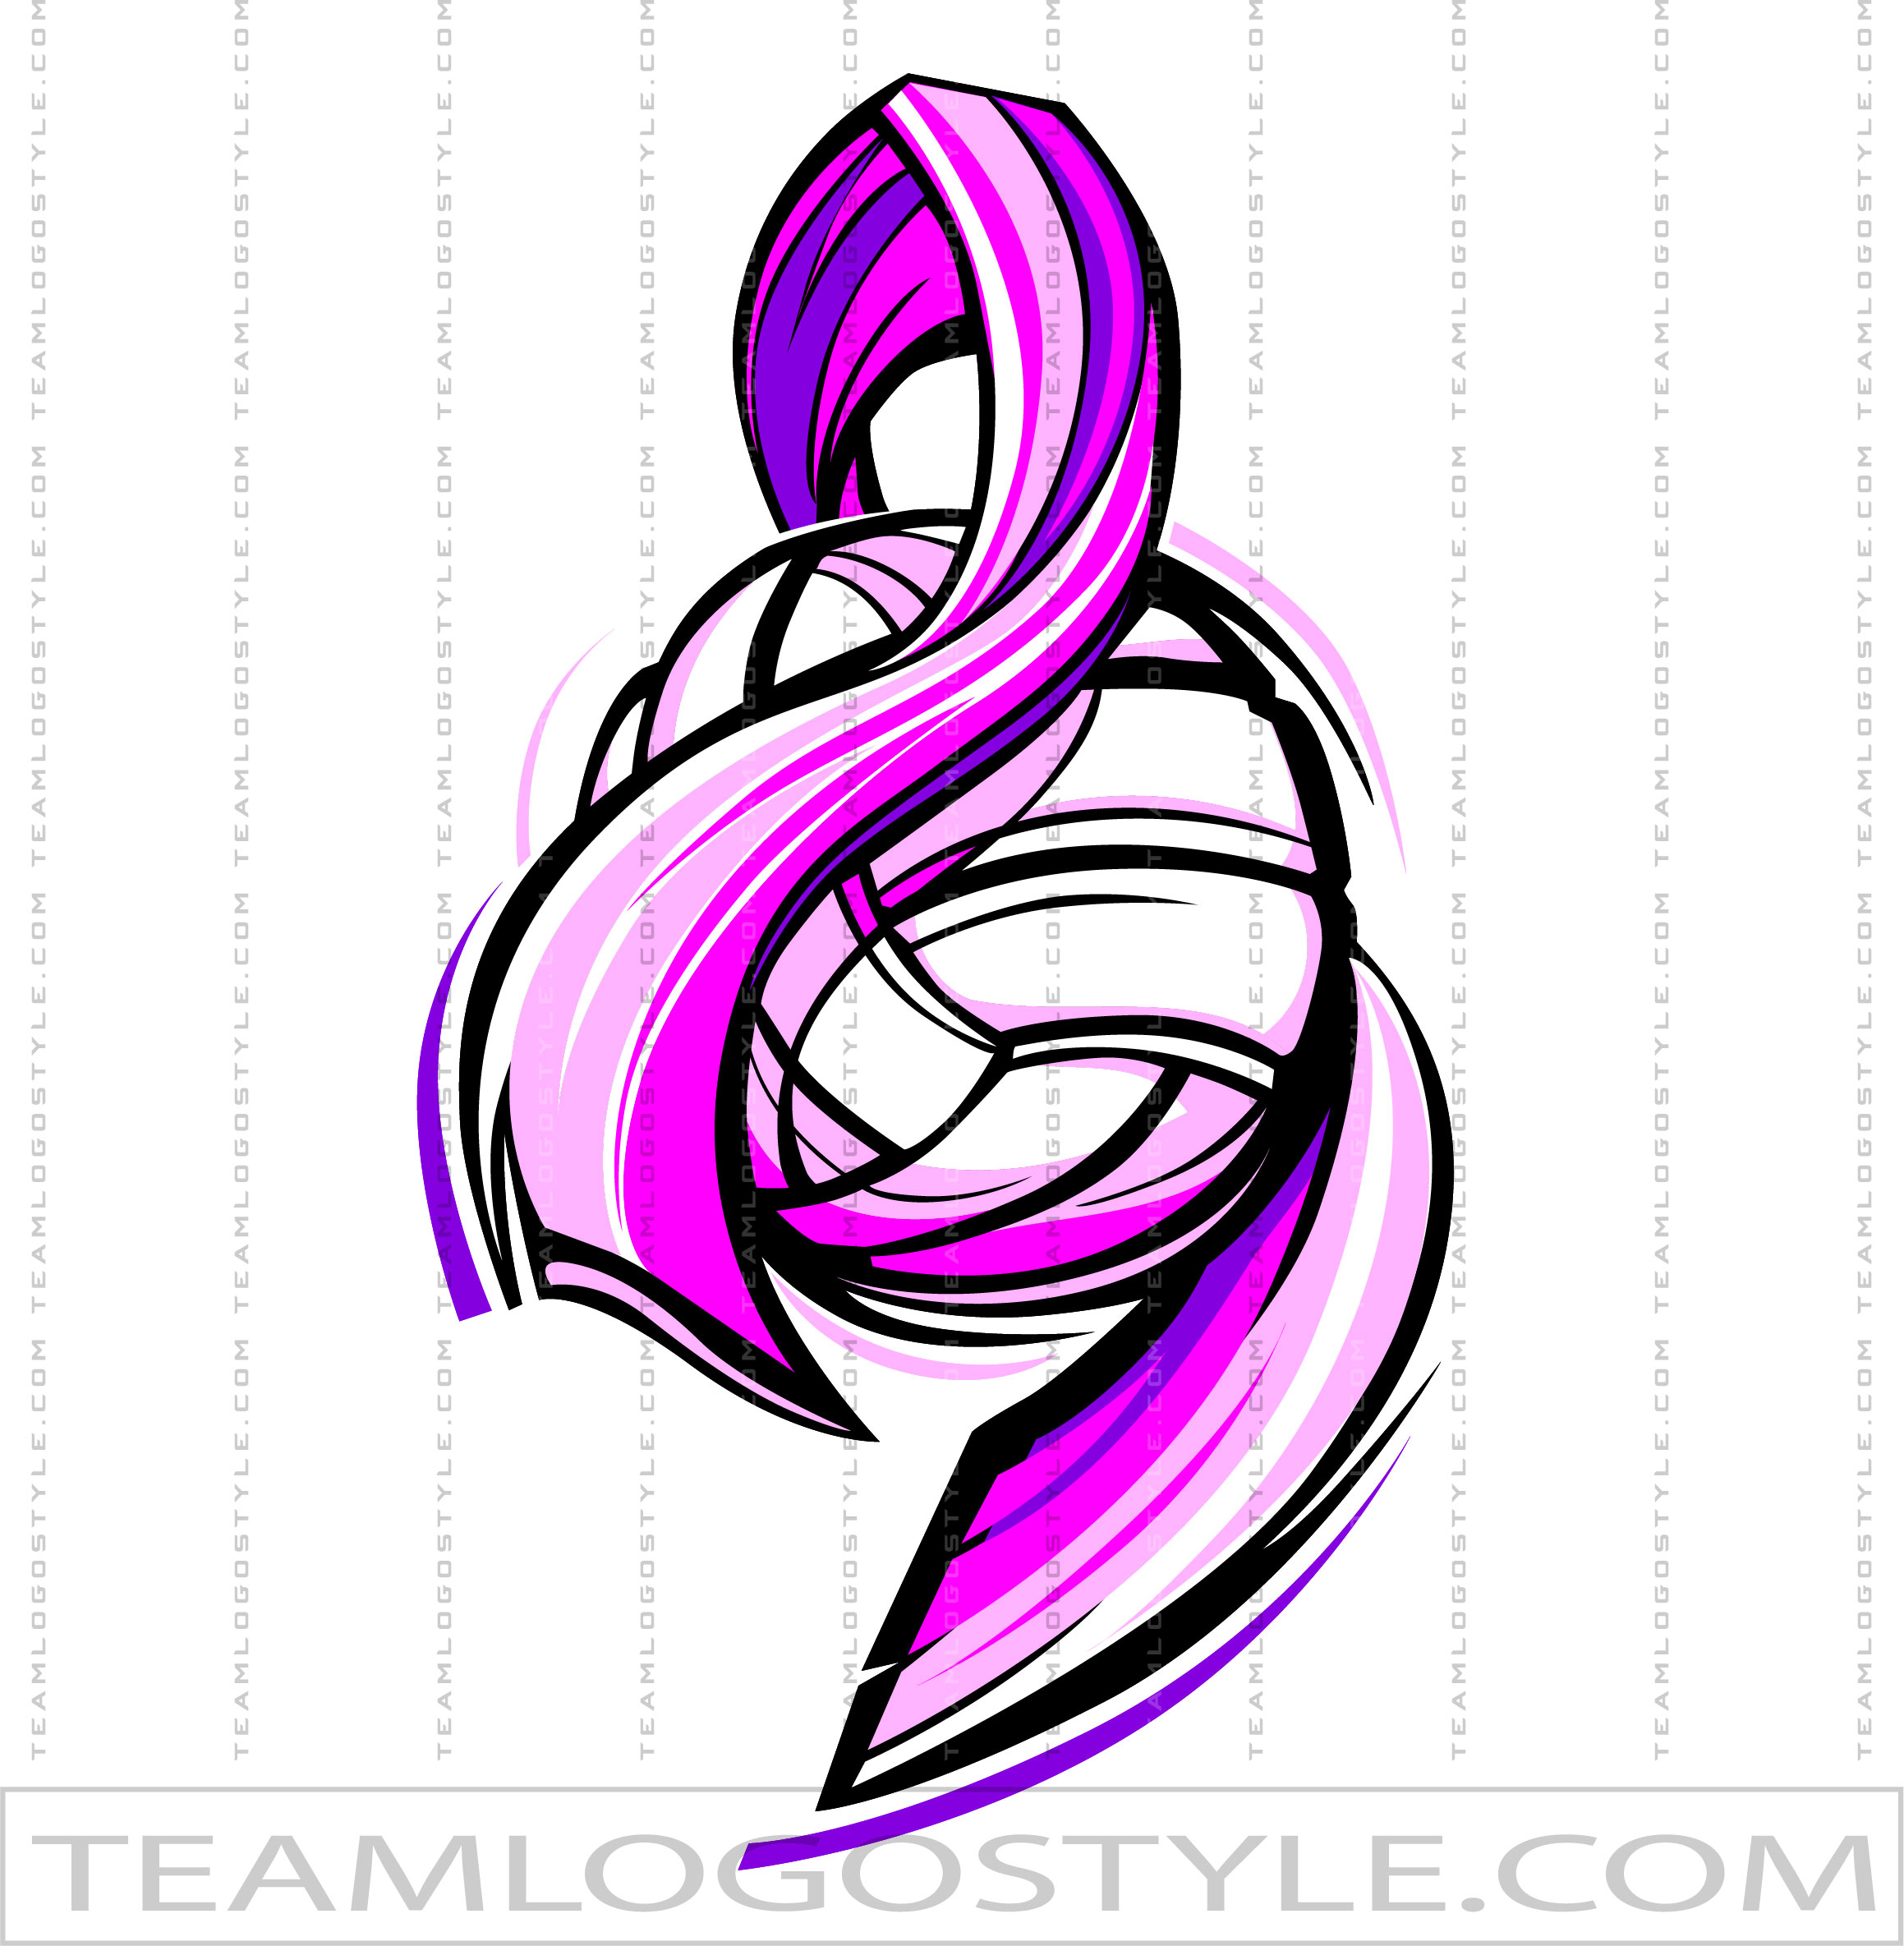 Volleyball Cheer Pink Ribbon – Bright Side Digital Designs